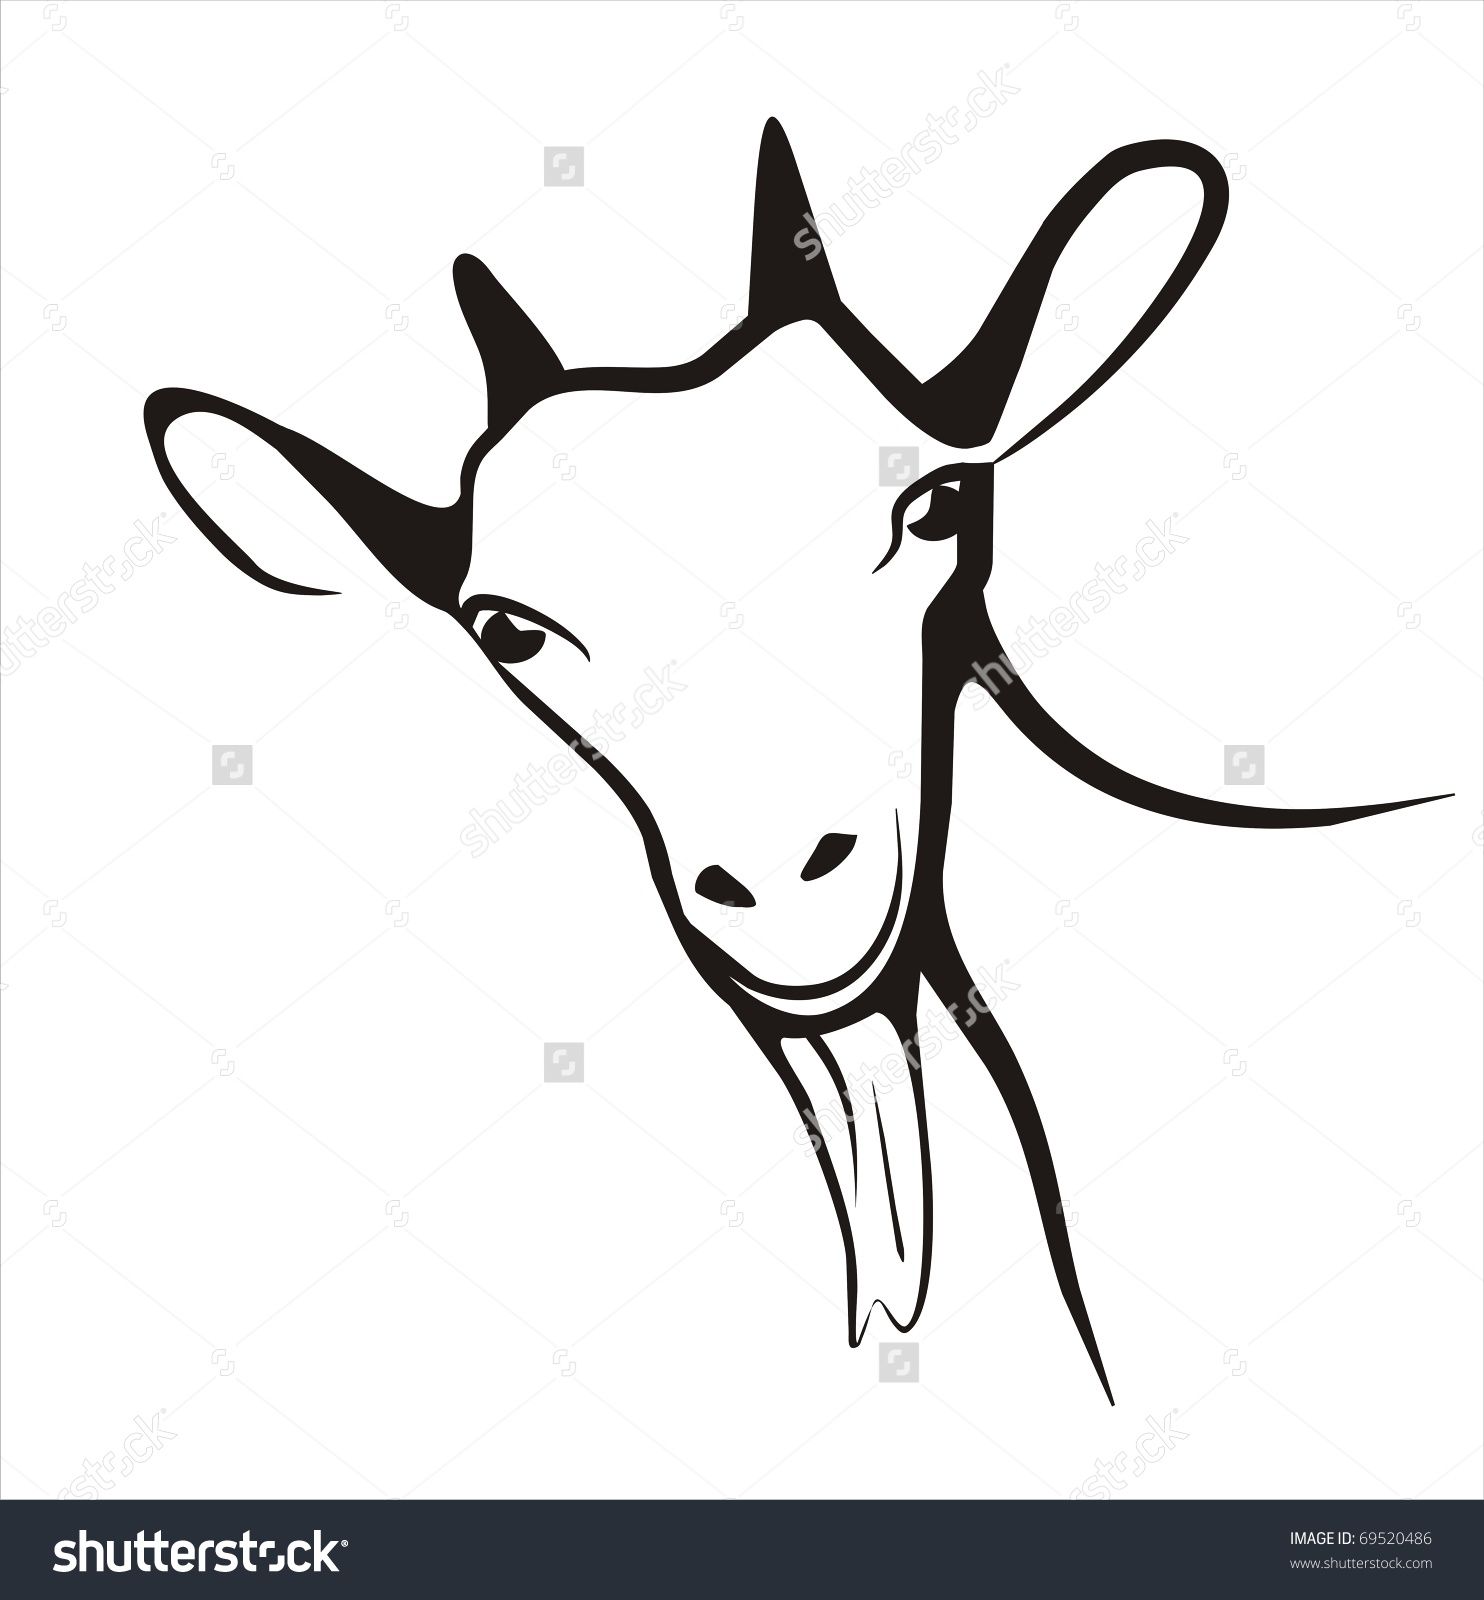 clipart goat female goat